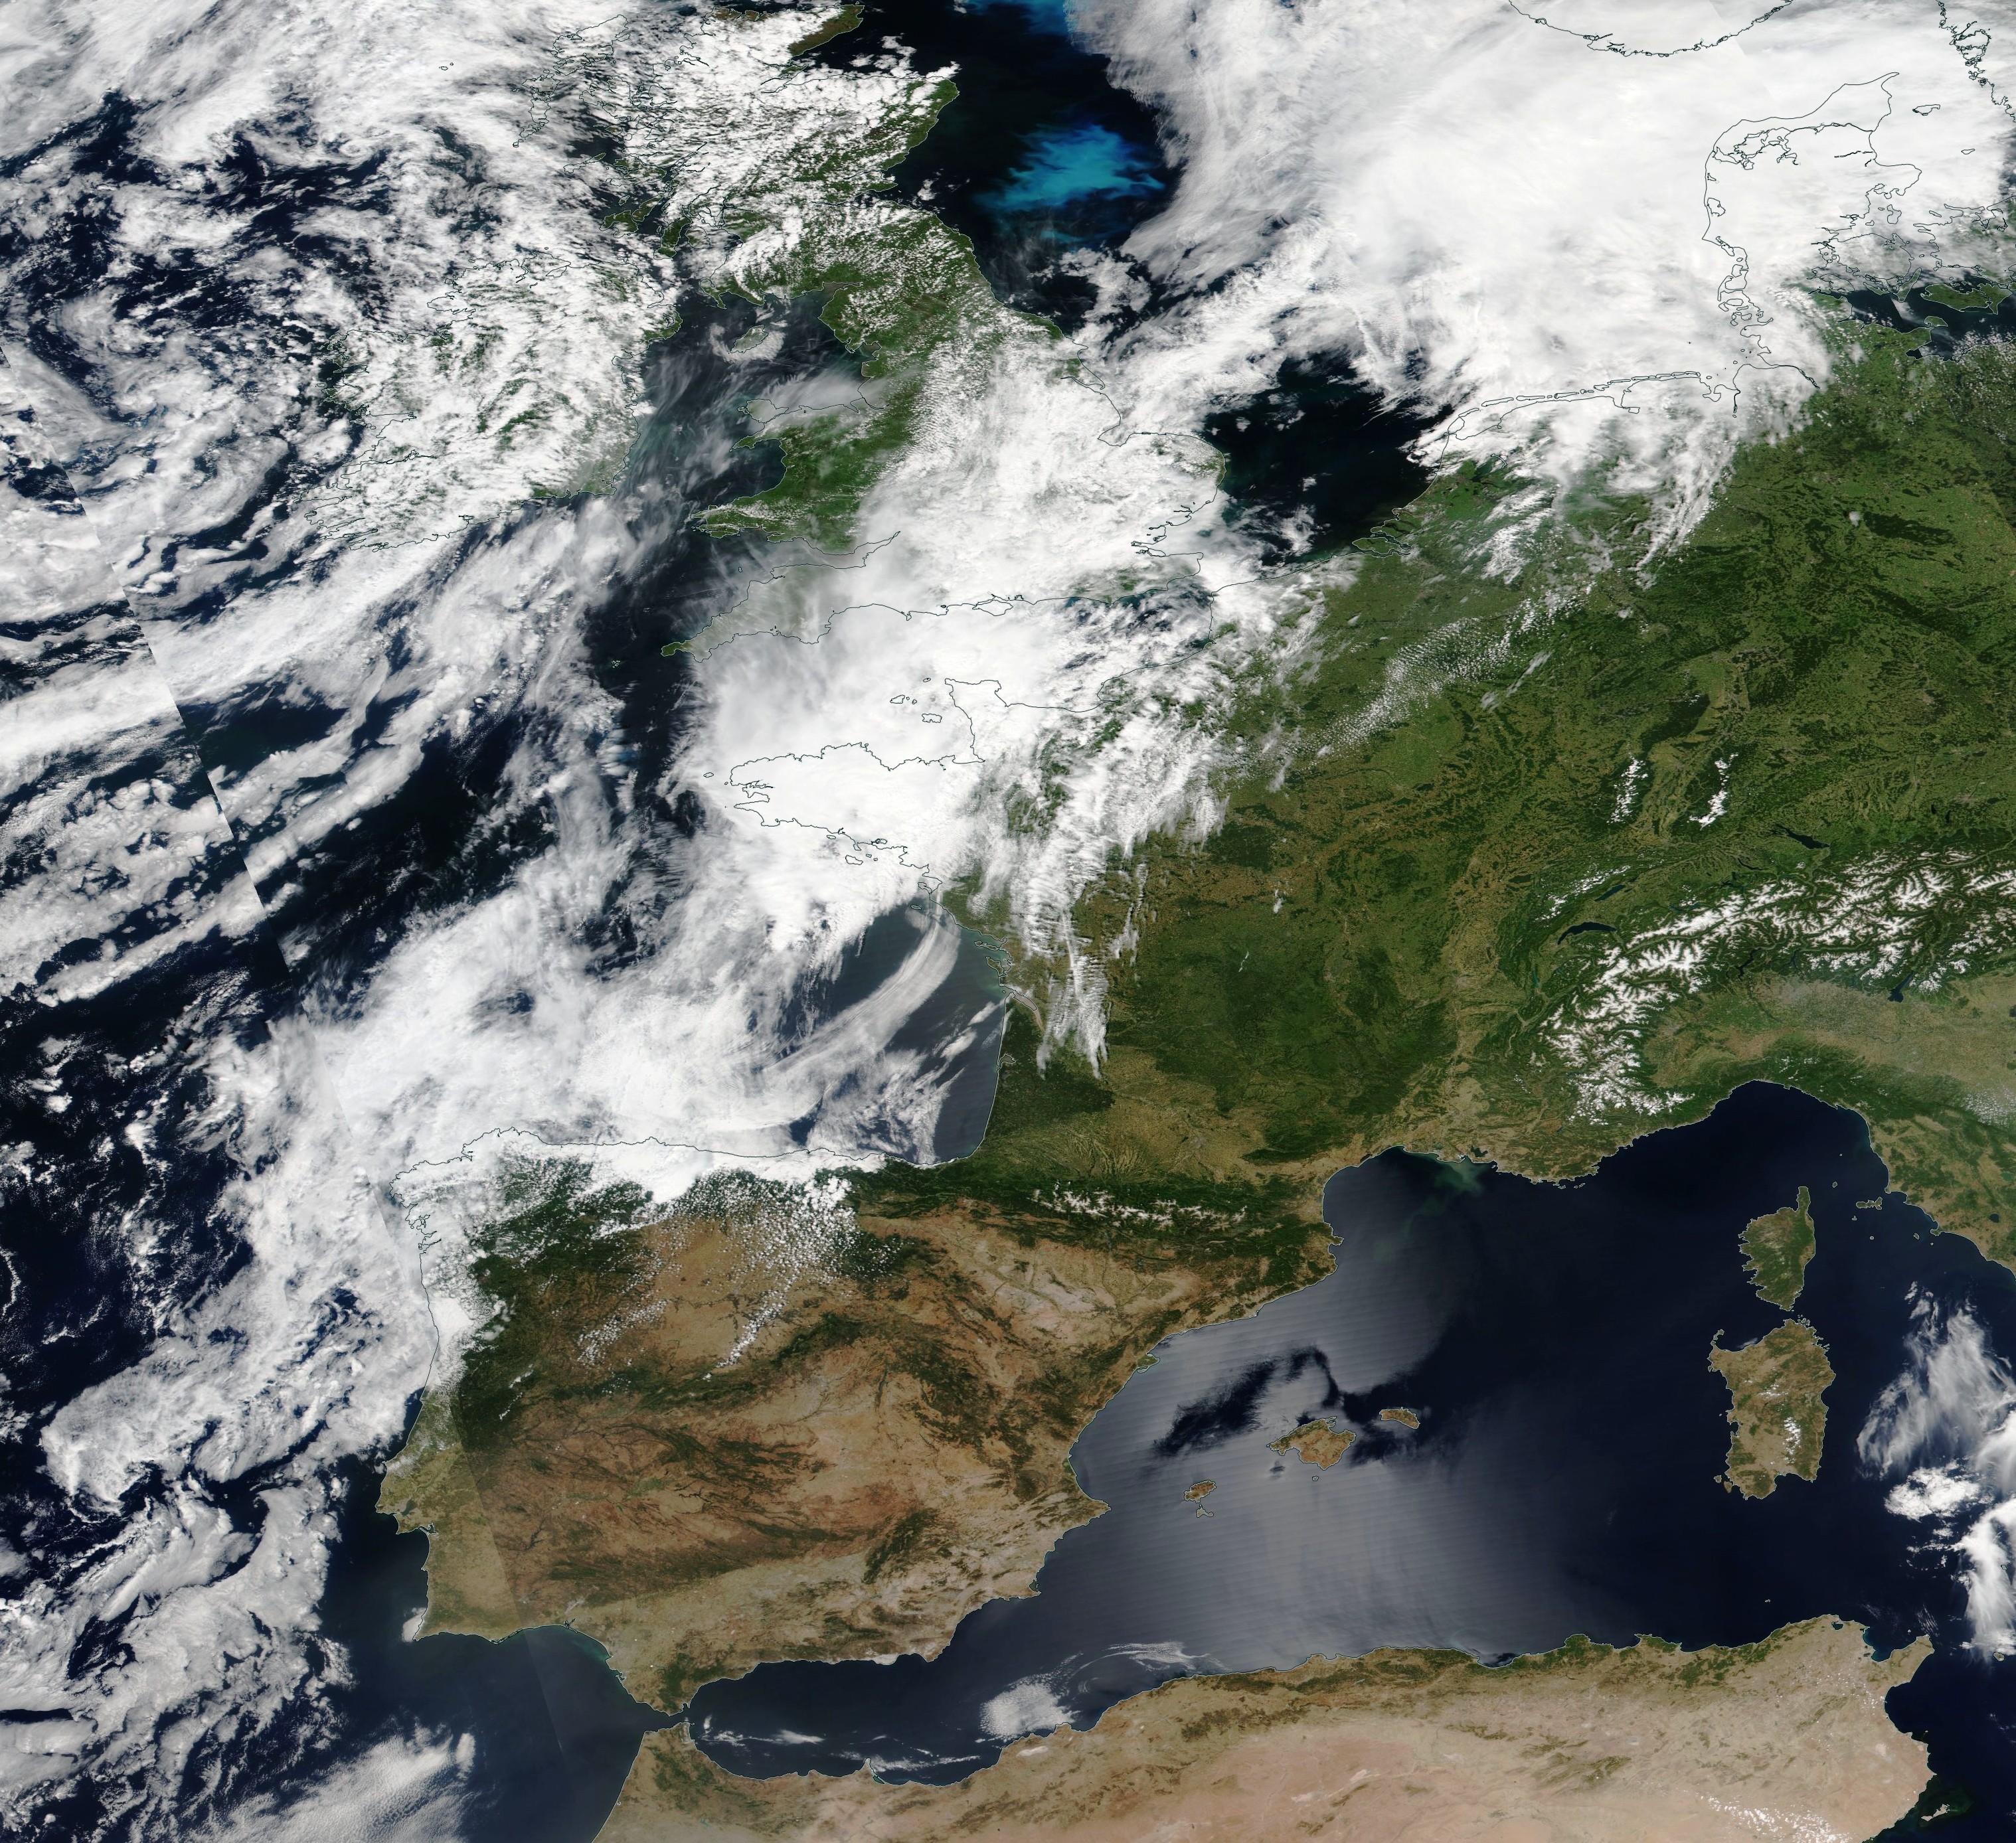 Couverture nuageuse - France 23 juin - Nuages - Orages - Brexit - Angleterre - Europe